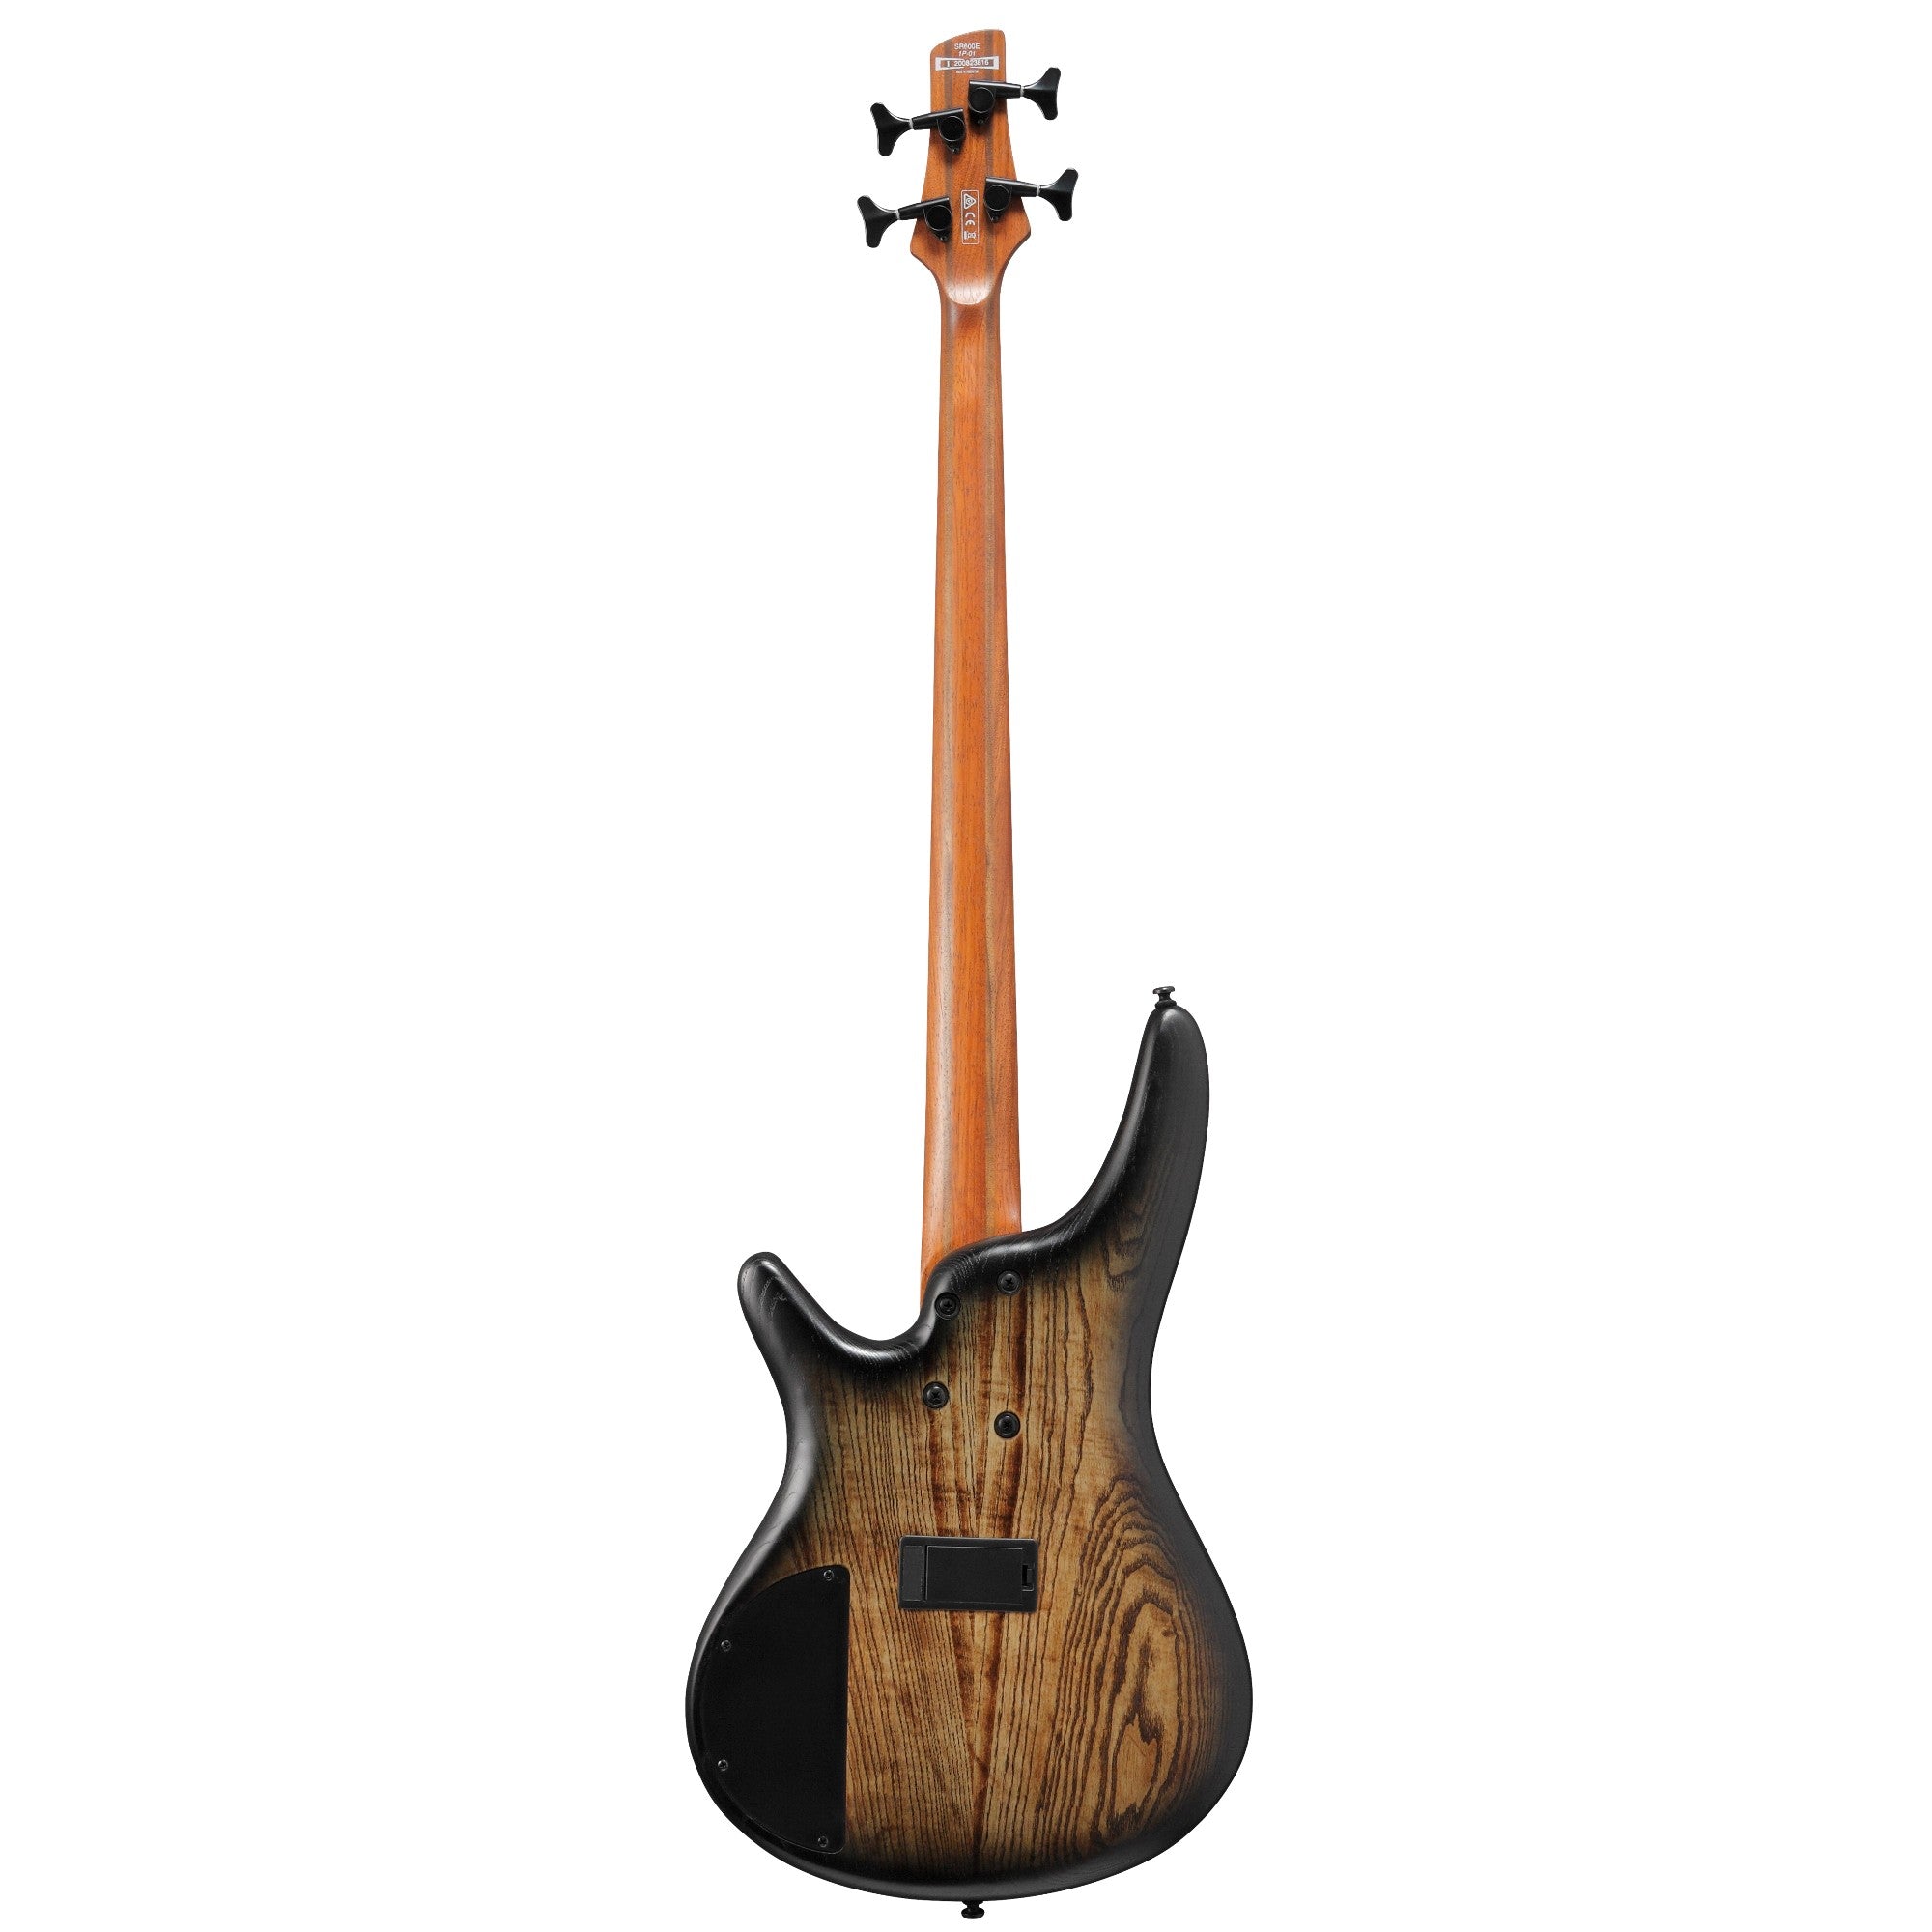 Ibanez SR600EAST 4-String Bass Guitar - Antique Brown Stained Burst back